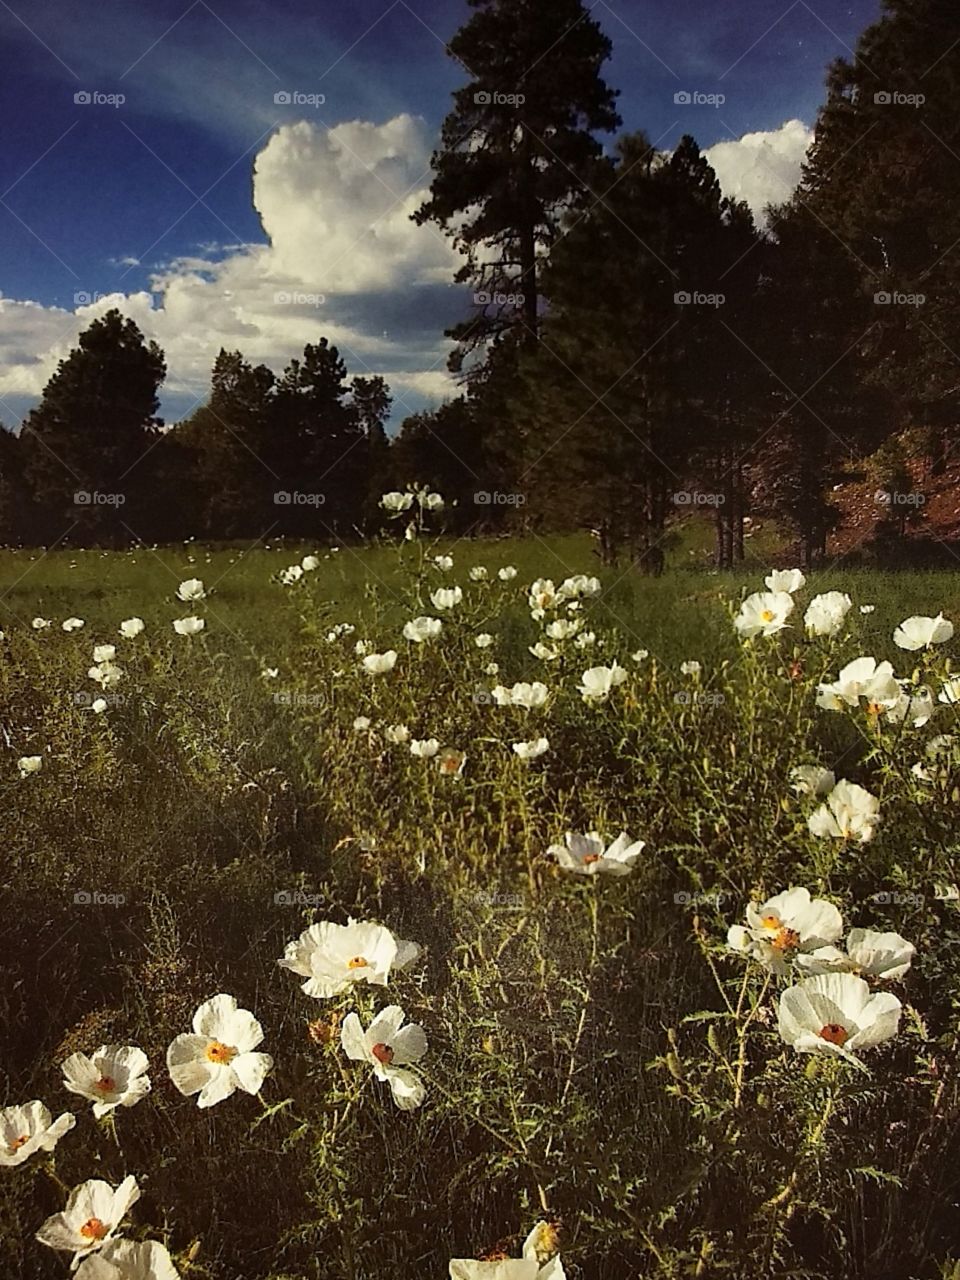 Northern AZ. meadow in full summer bloom